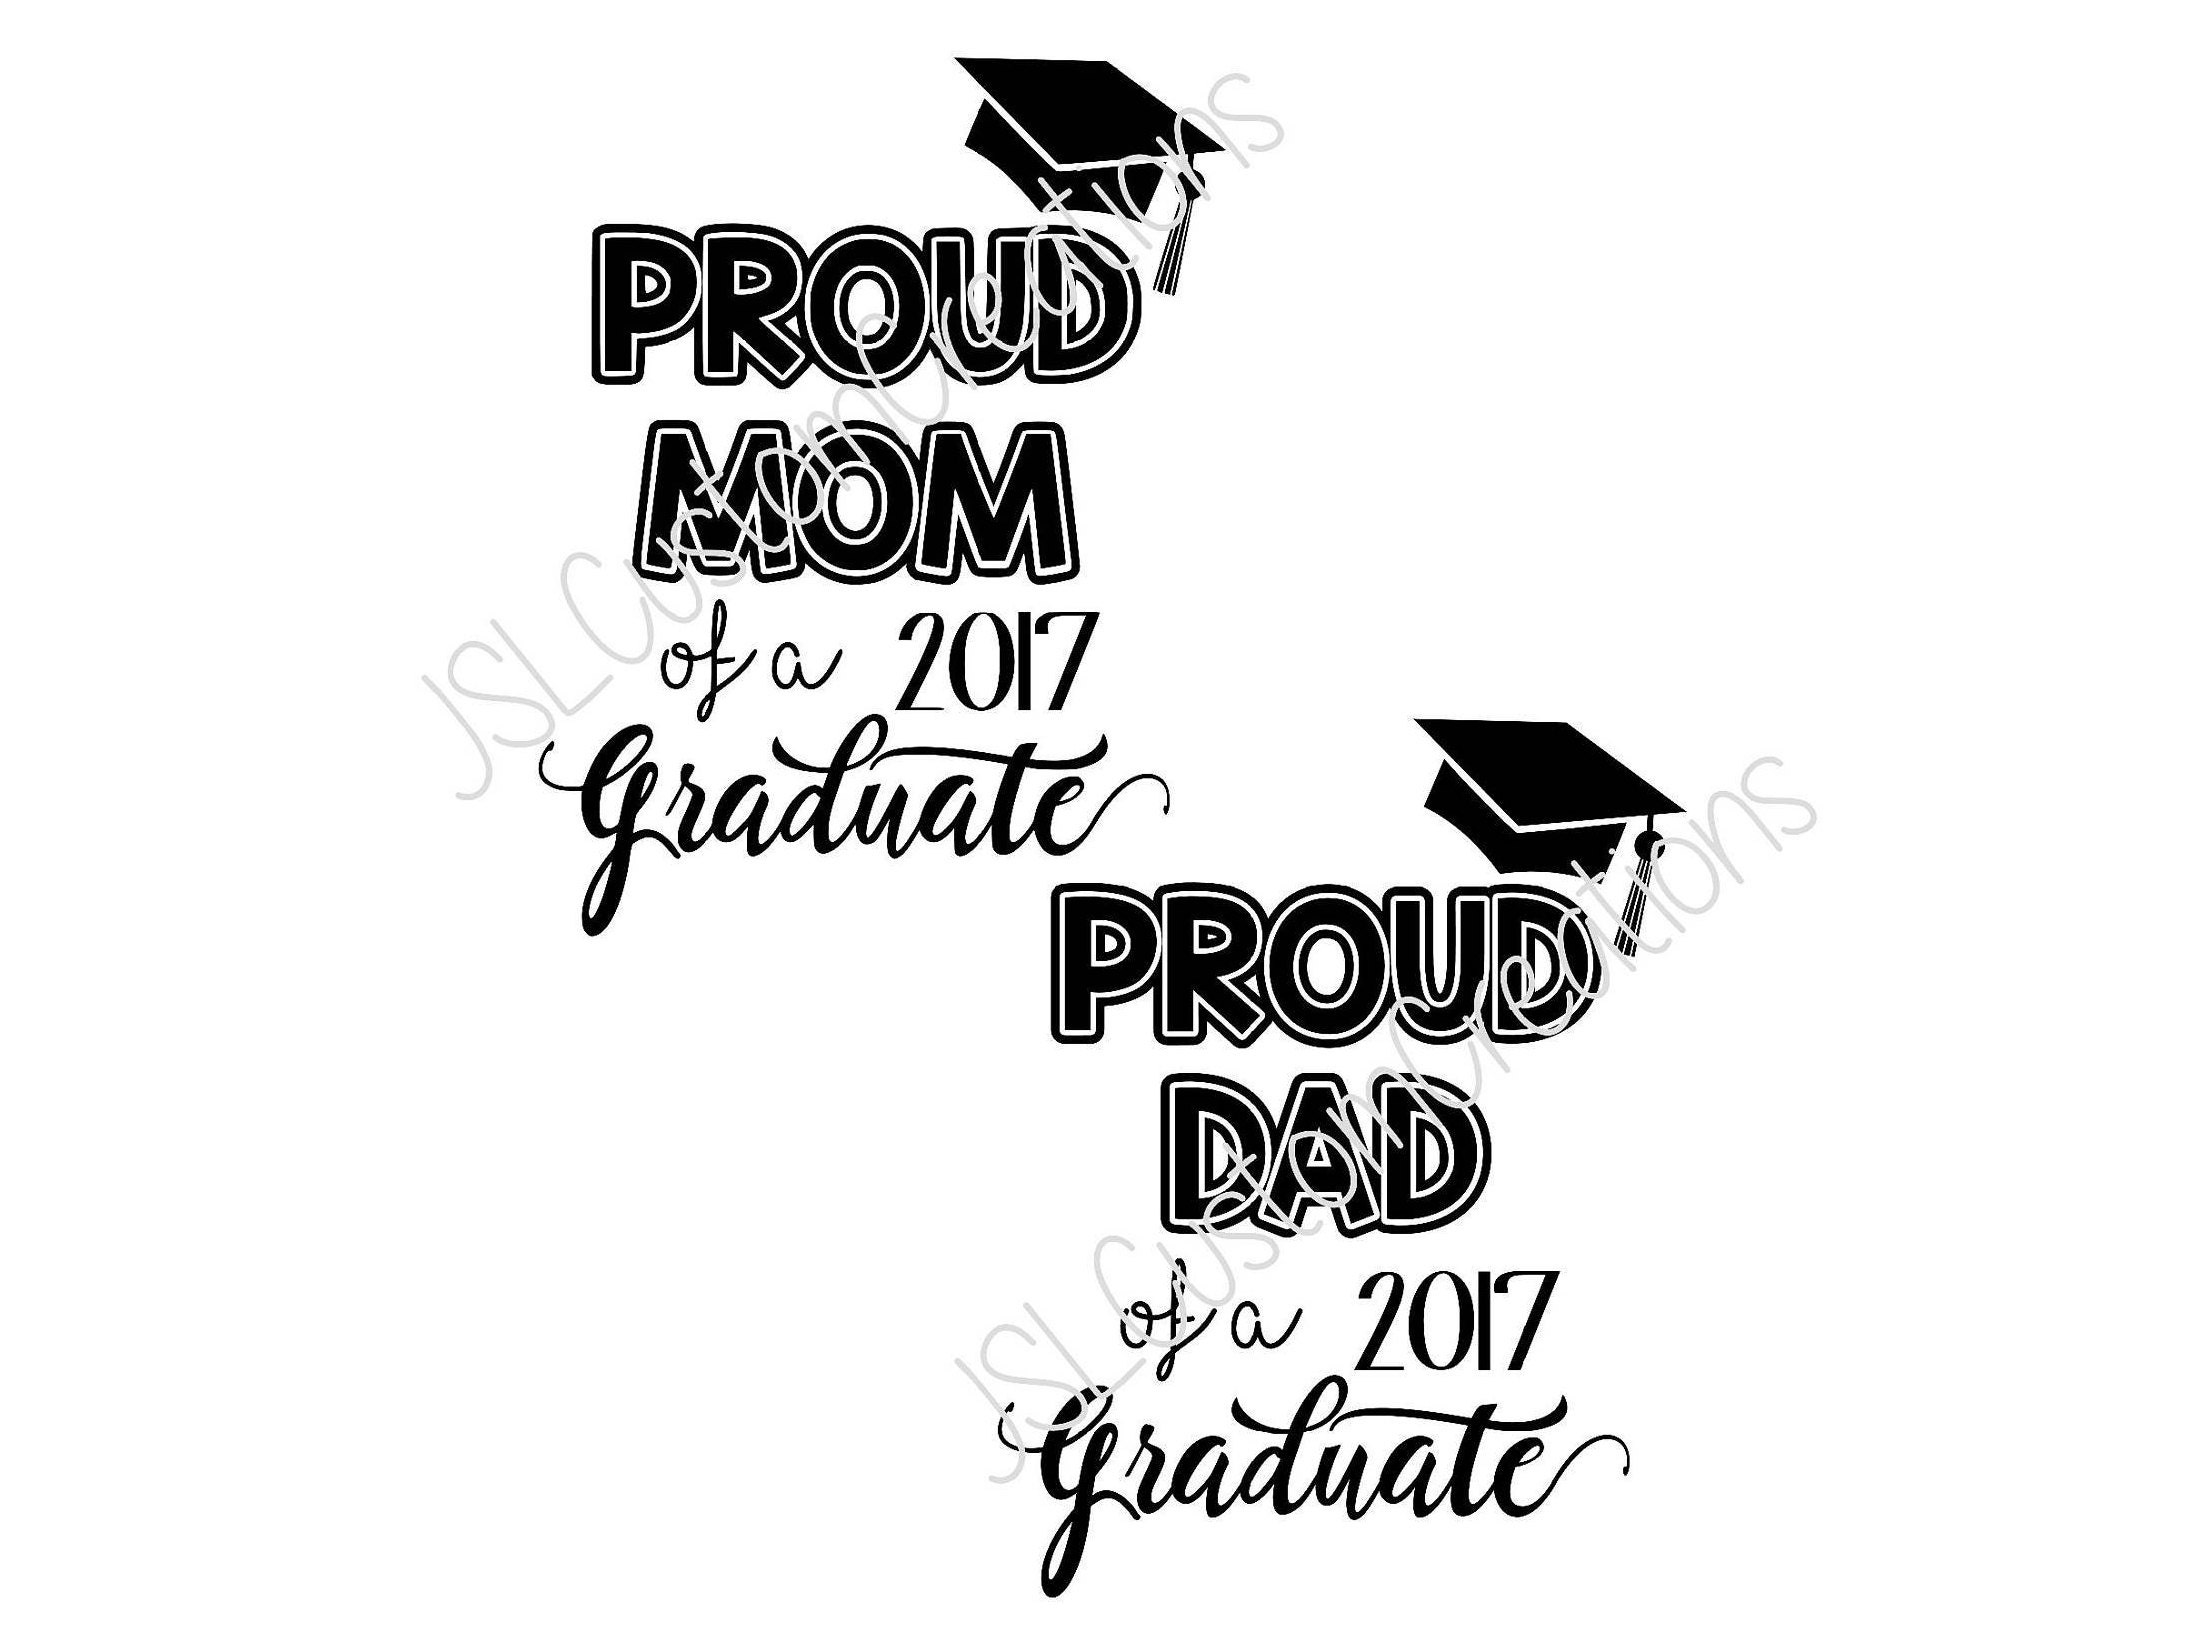 Download Proud Mom of a 2017 Graduate Proud Dad of a 2017 Graduate